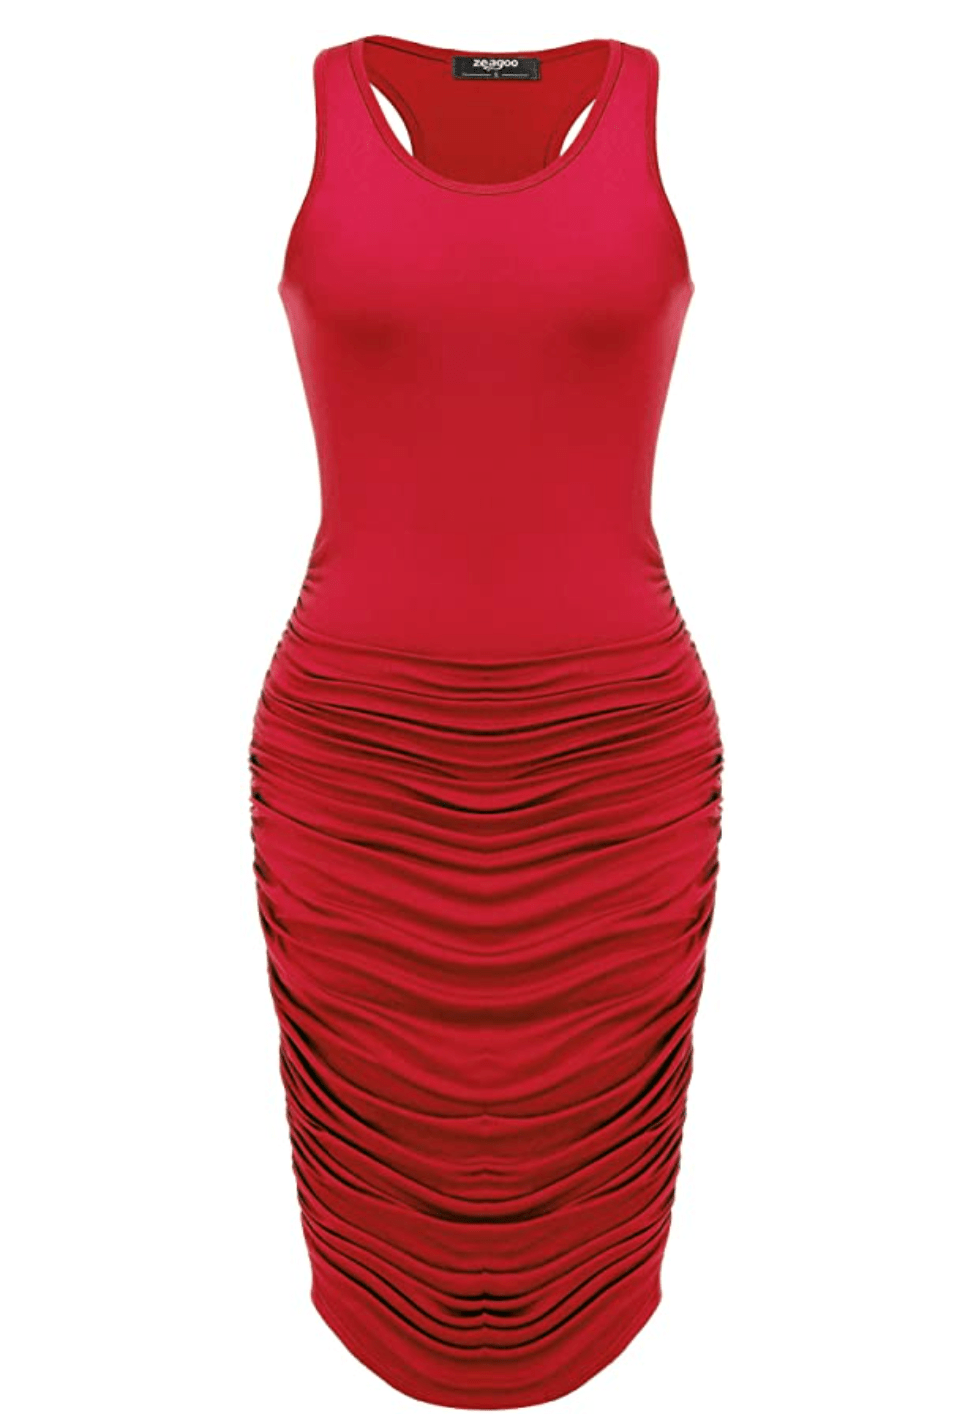 Zeagoo Midi Stretchy Sleeveless Ruched Bodycon Dress for Women